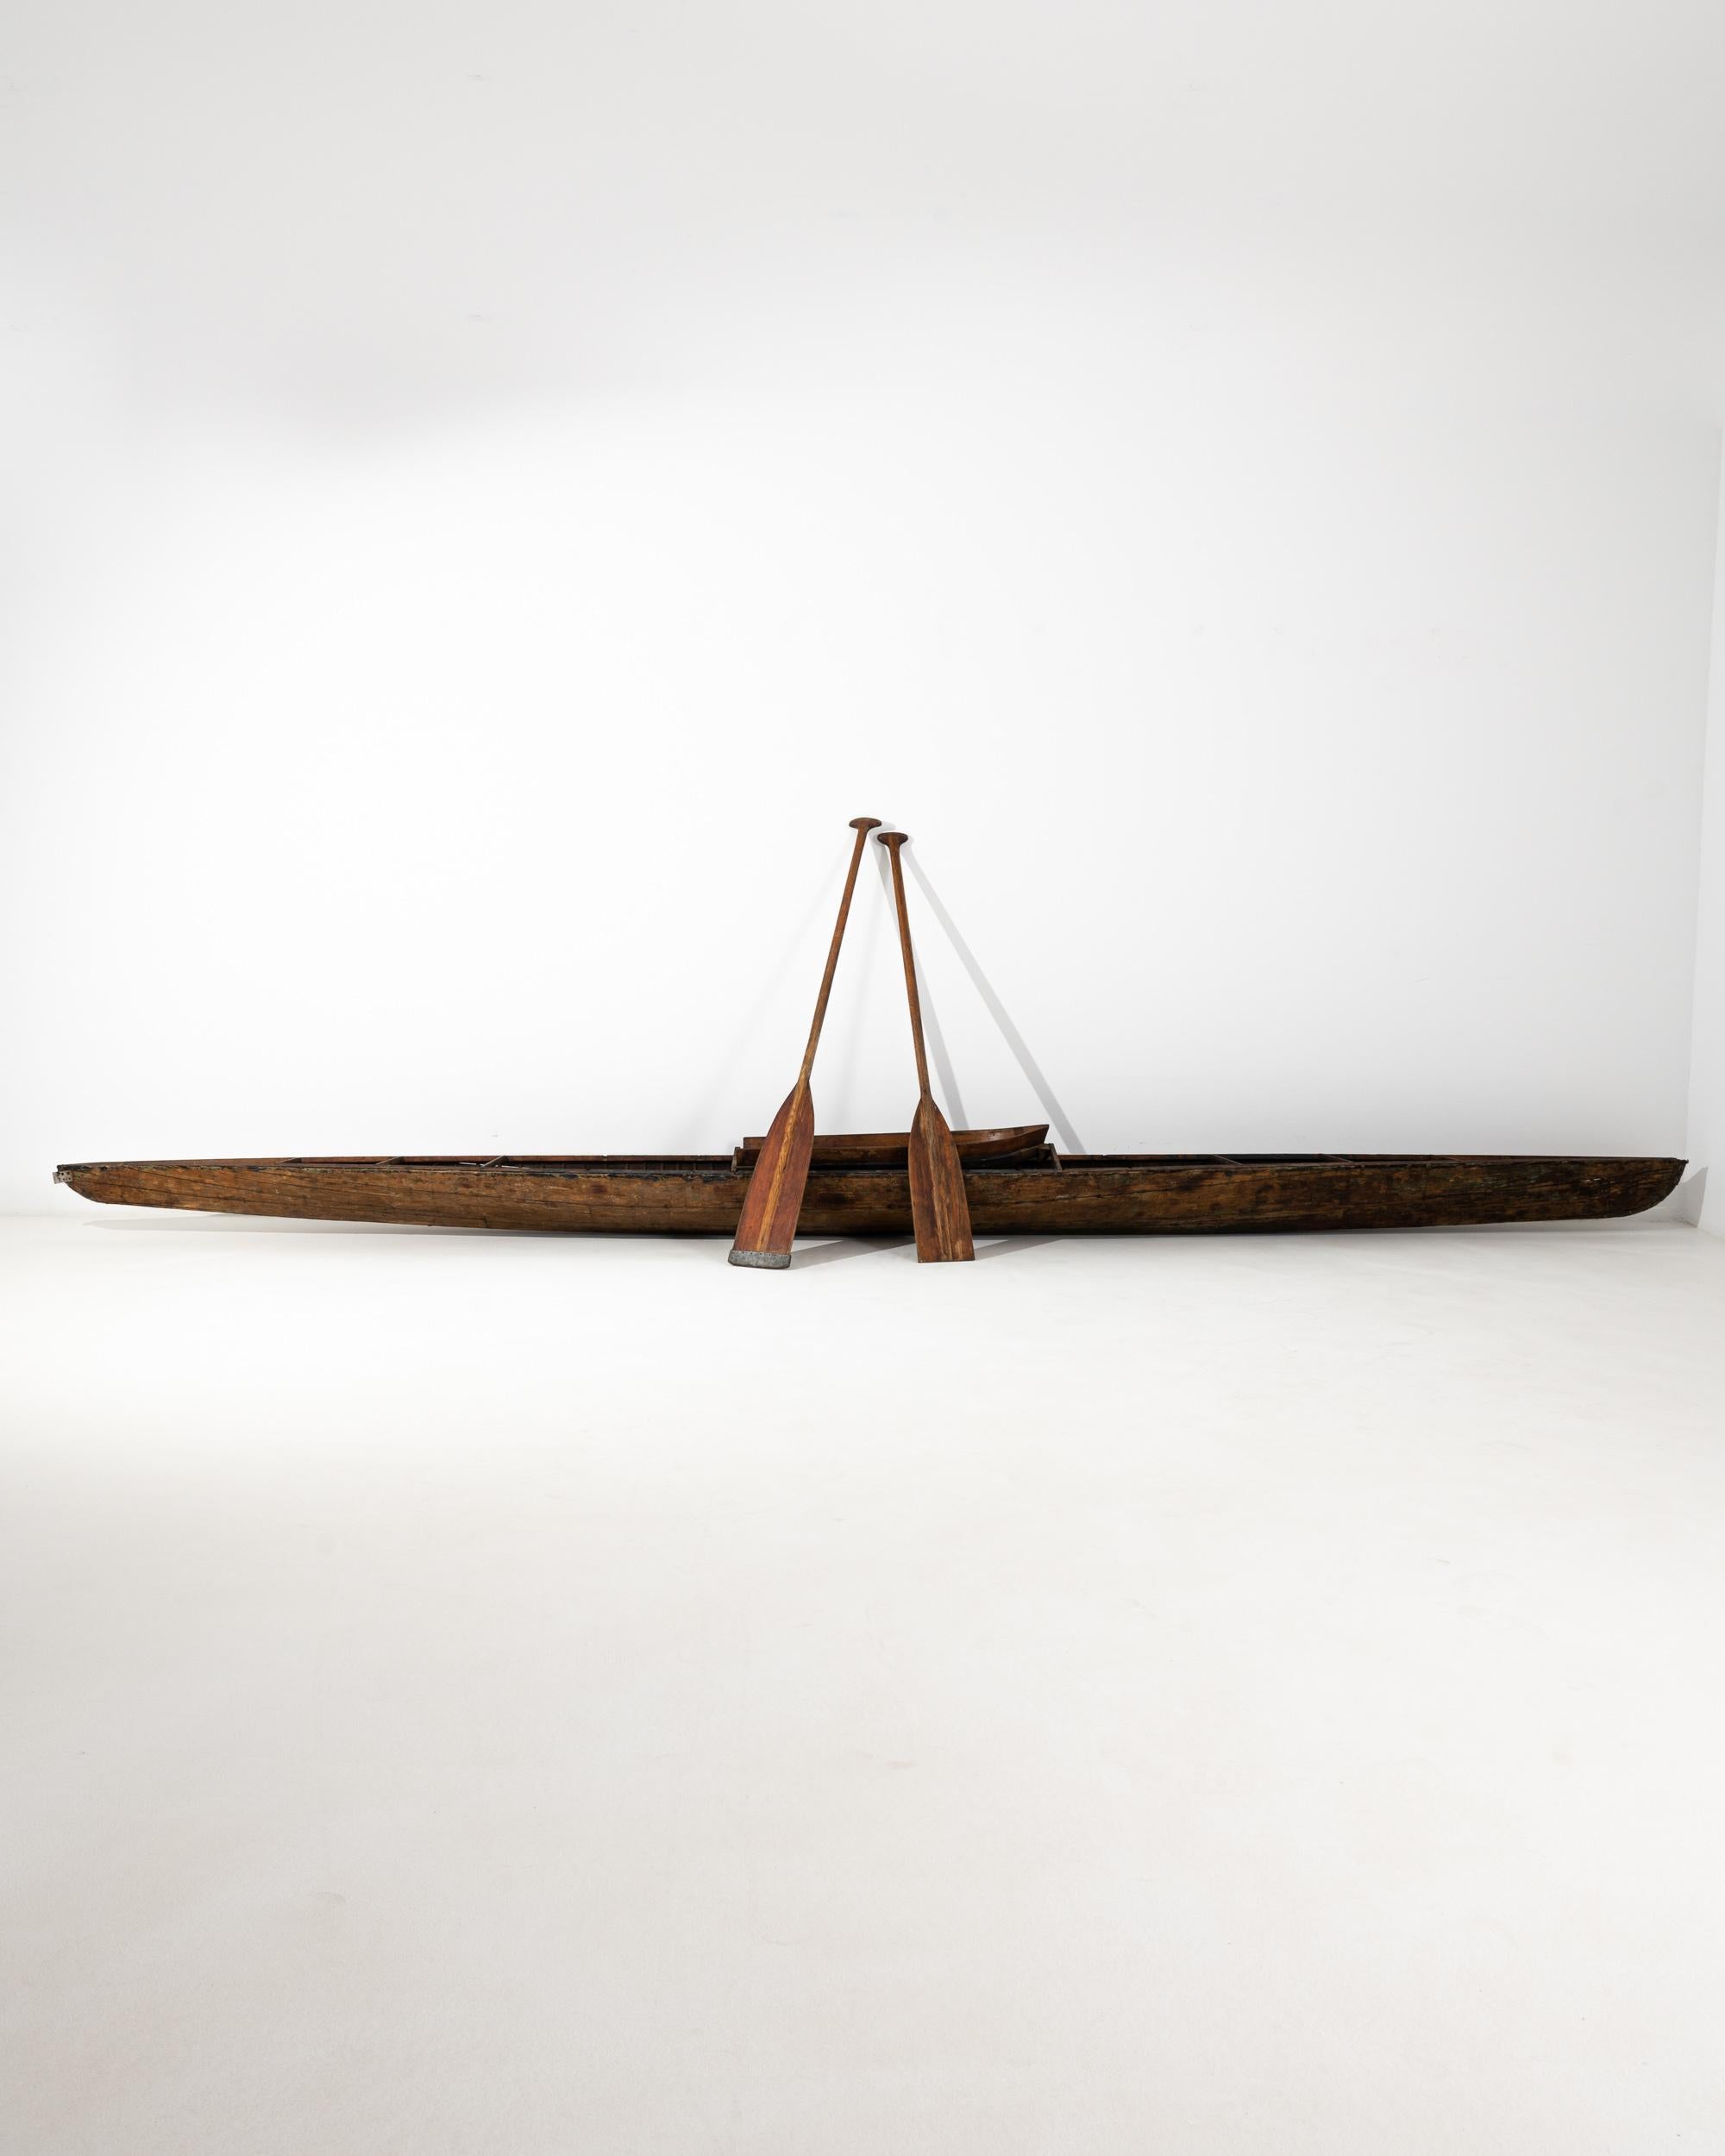 German Early 20th Century, European Wooden Kayak